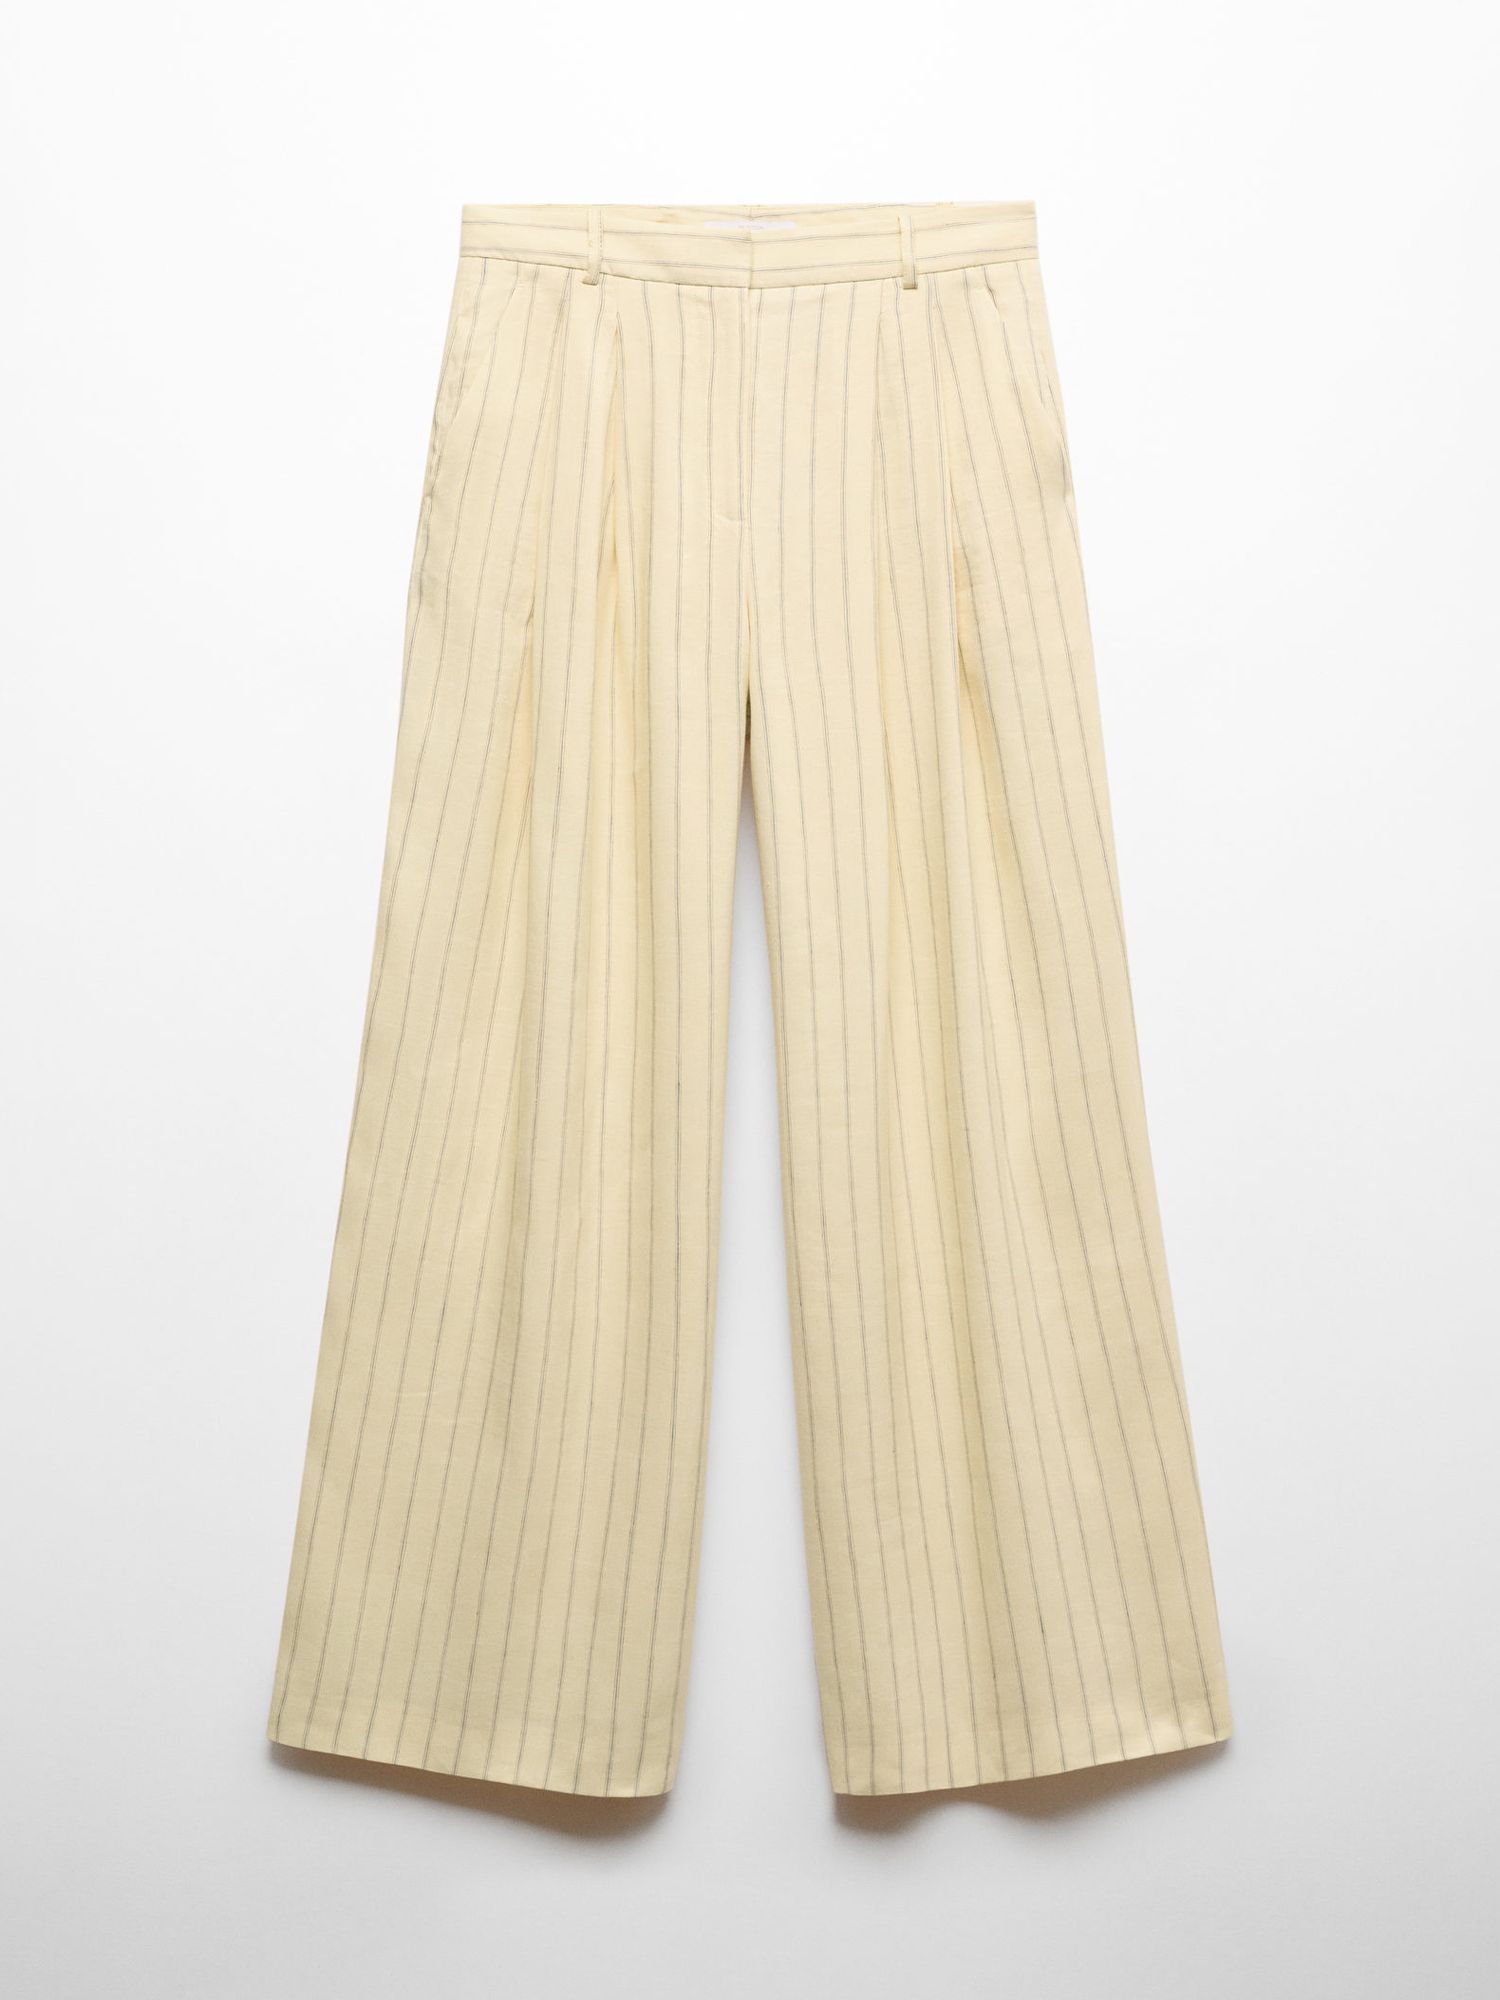 Mango Delta Linen Blend Striped Trousers, Yellow, 10